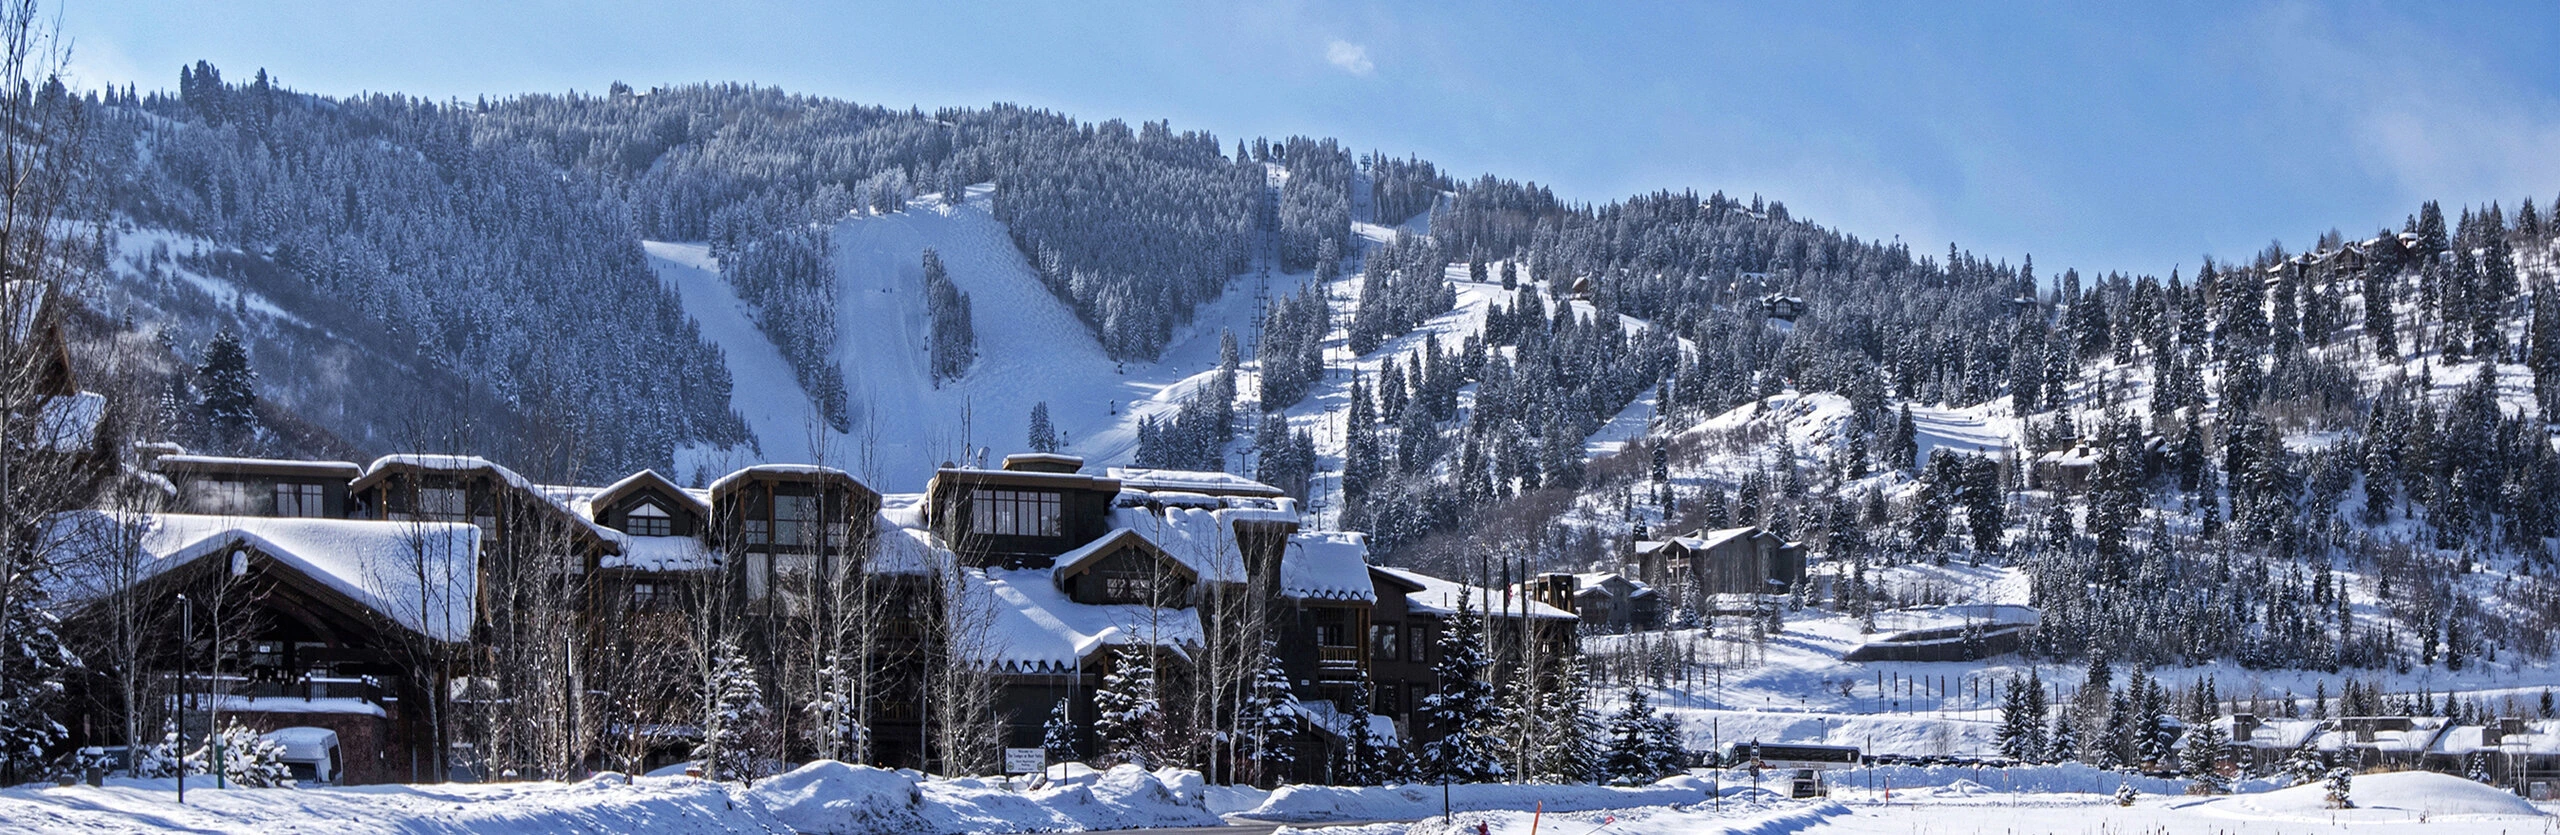 Deer Valley Real Estate and Ski Runs in winter